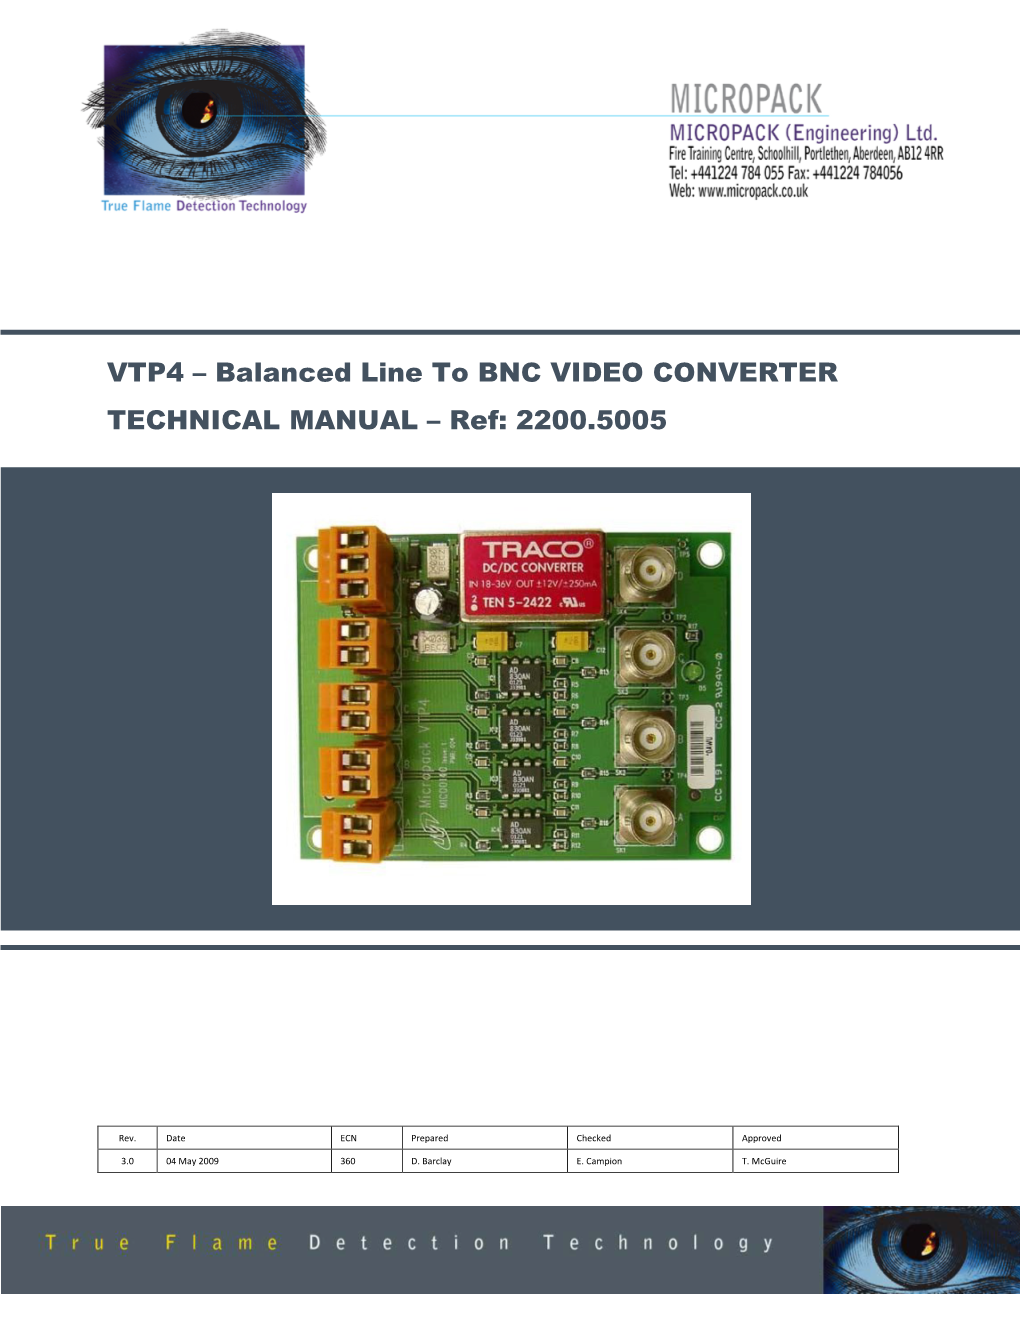 VTP4 – Balanced Line to BNC VIDEO CONVERTER TECHNICAL MANUAL – Ref: 2200.5005